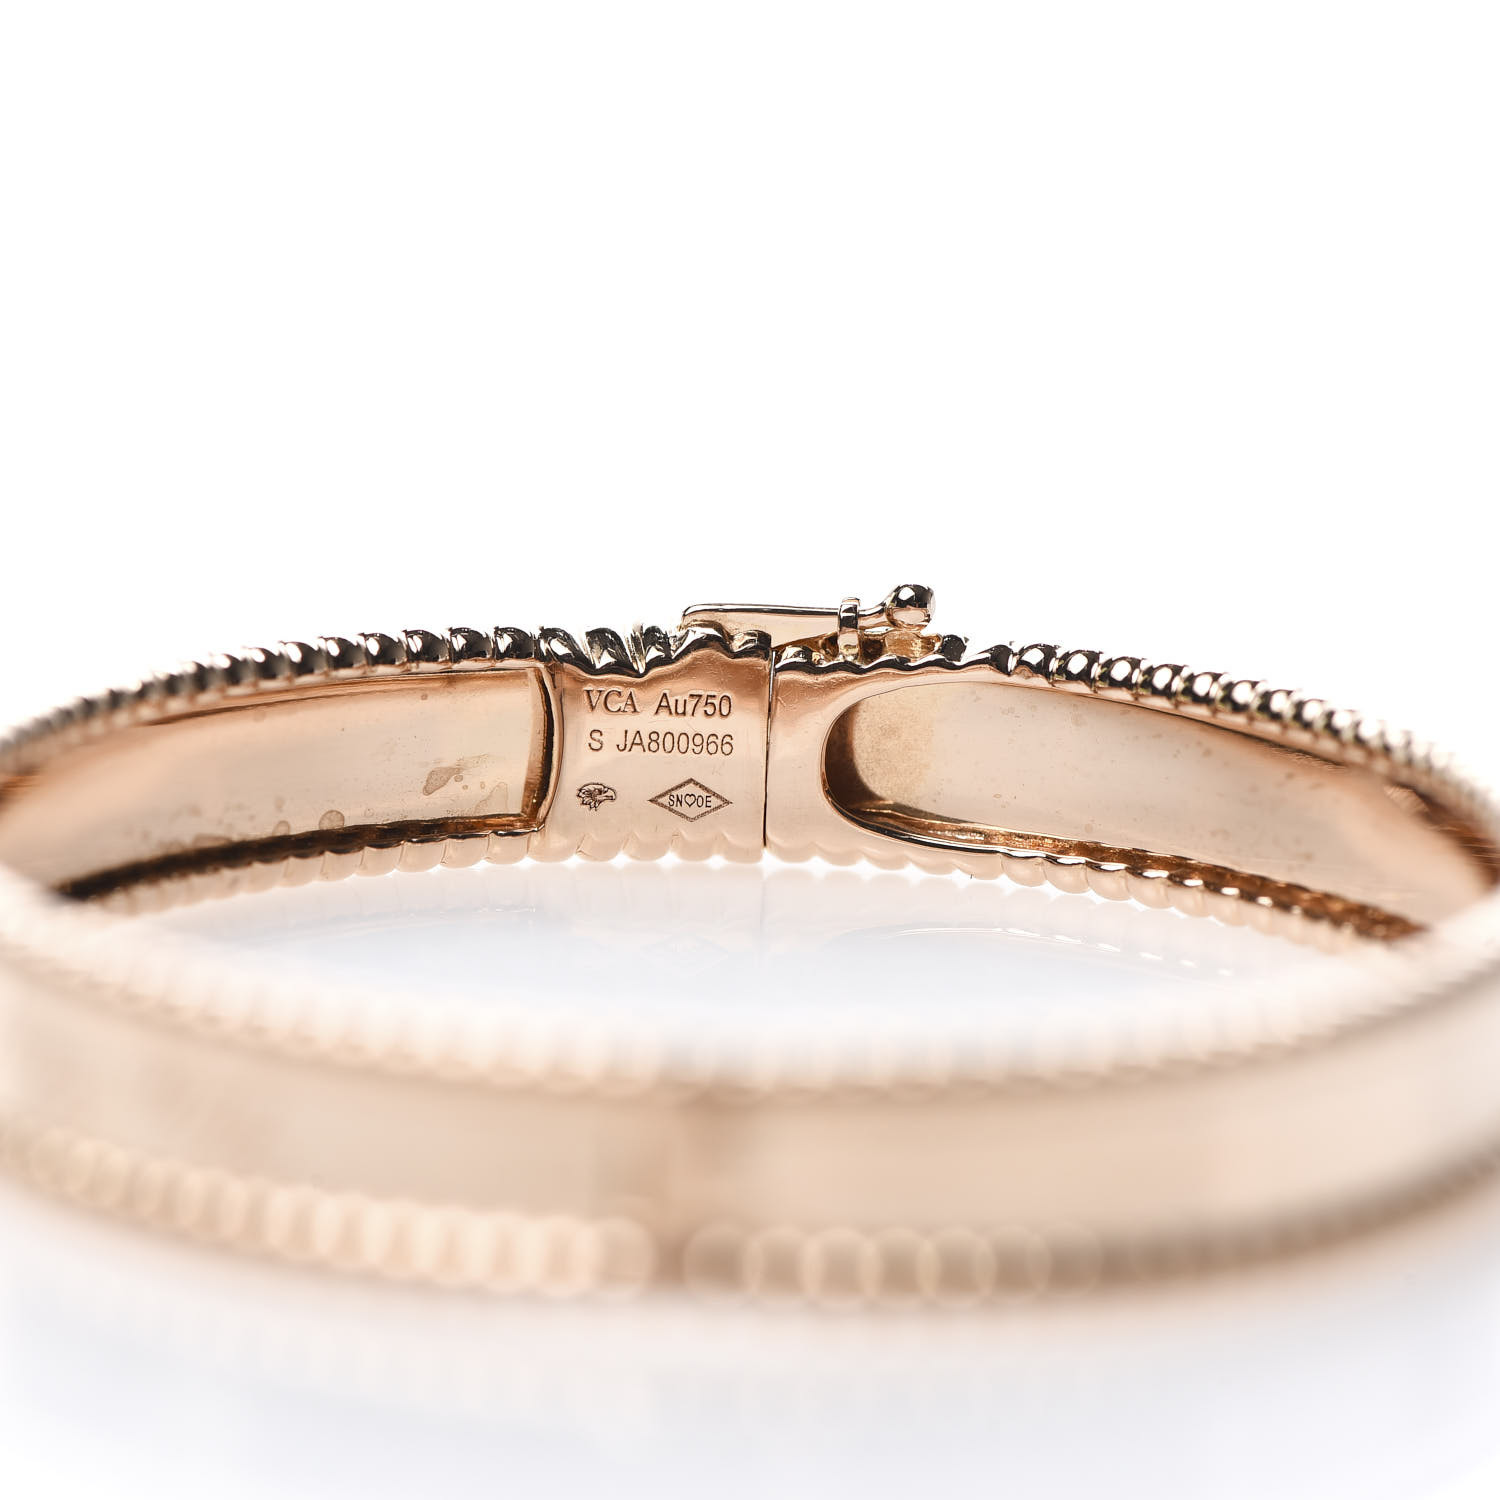 VAN CLEEF & ARPELS 18K Rose Gold Perlee Signature Bangle Bracelet S 601310